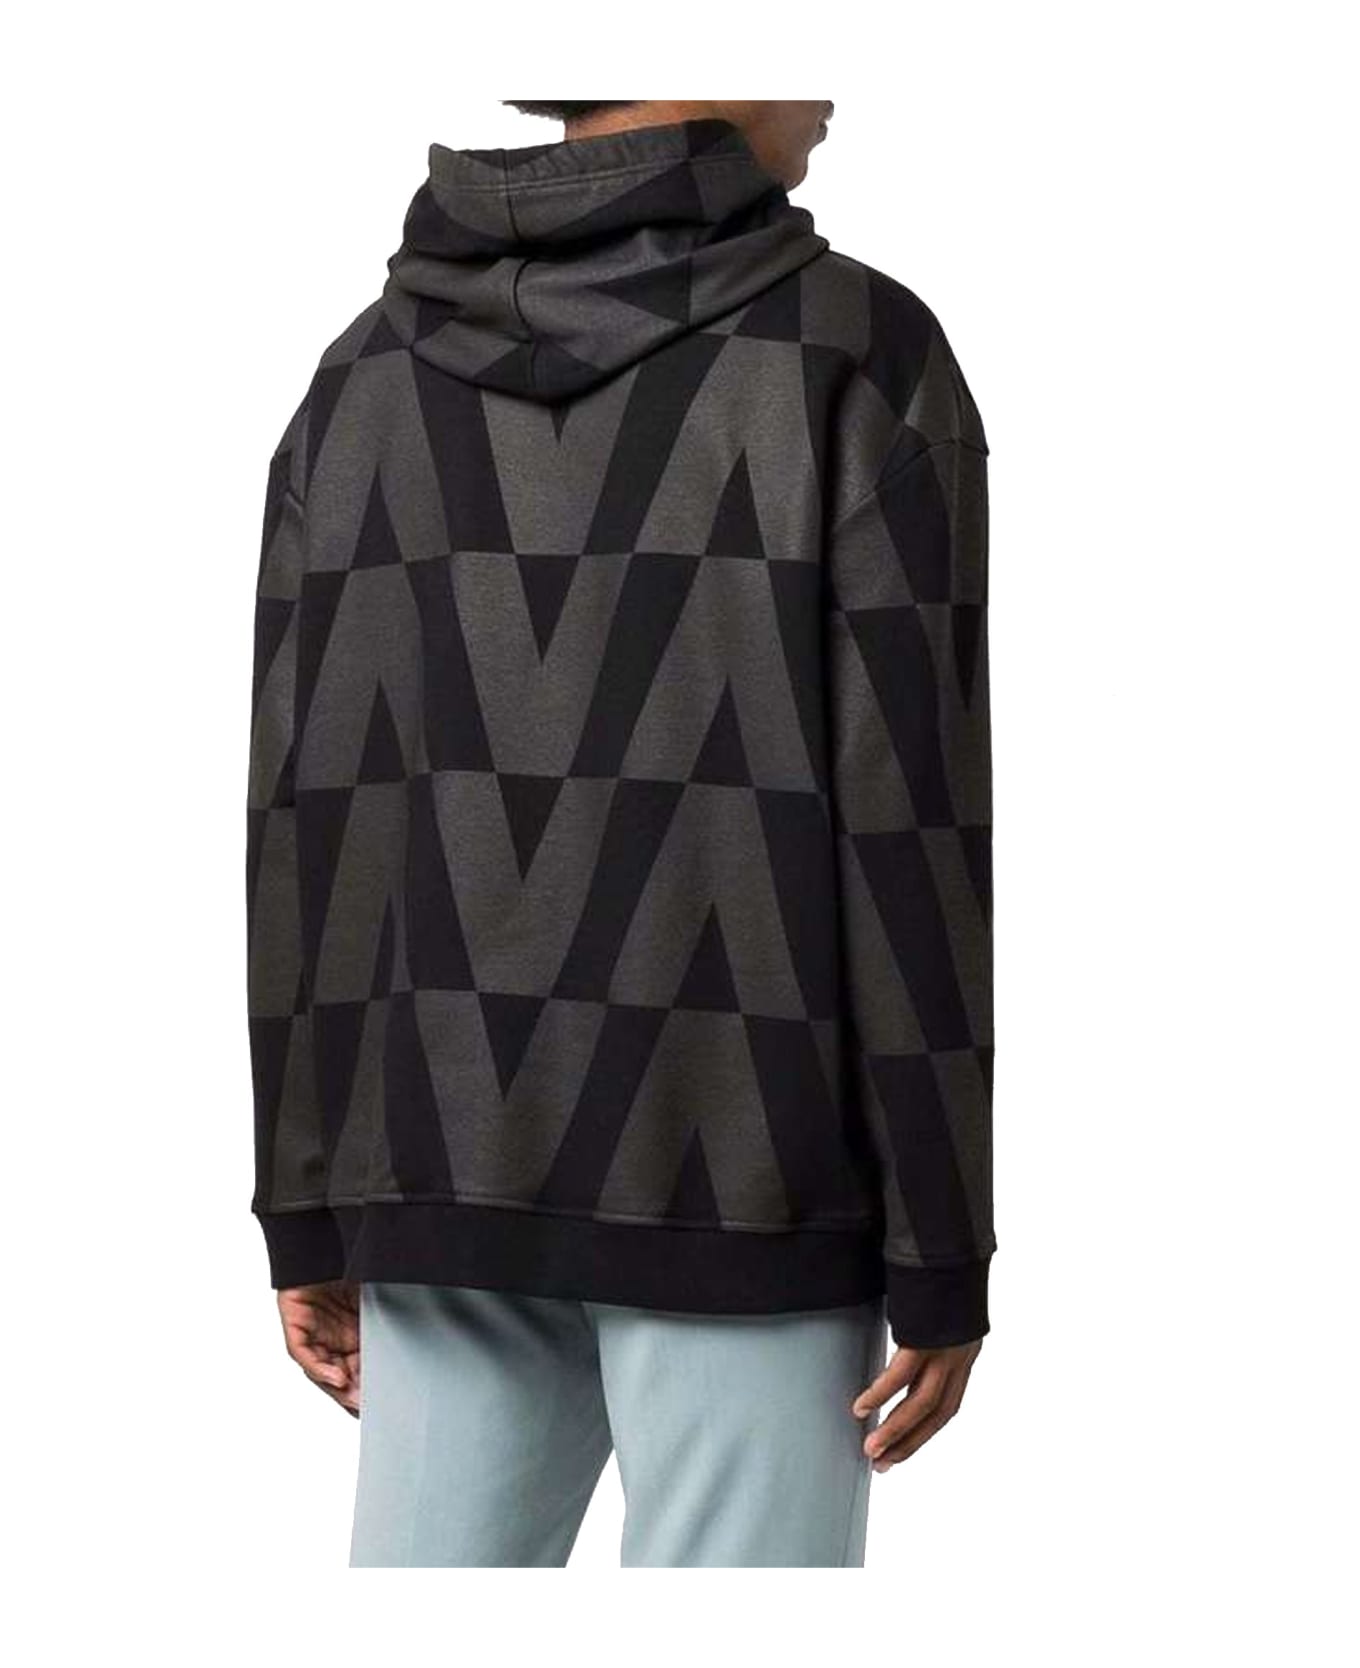 Valentino Cotton Logo Sweatshirt - Black